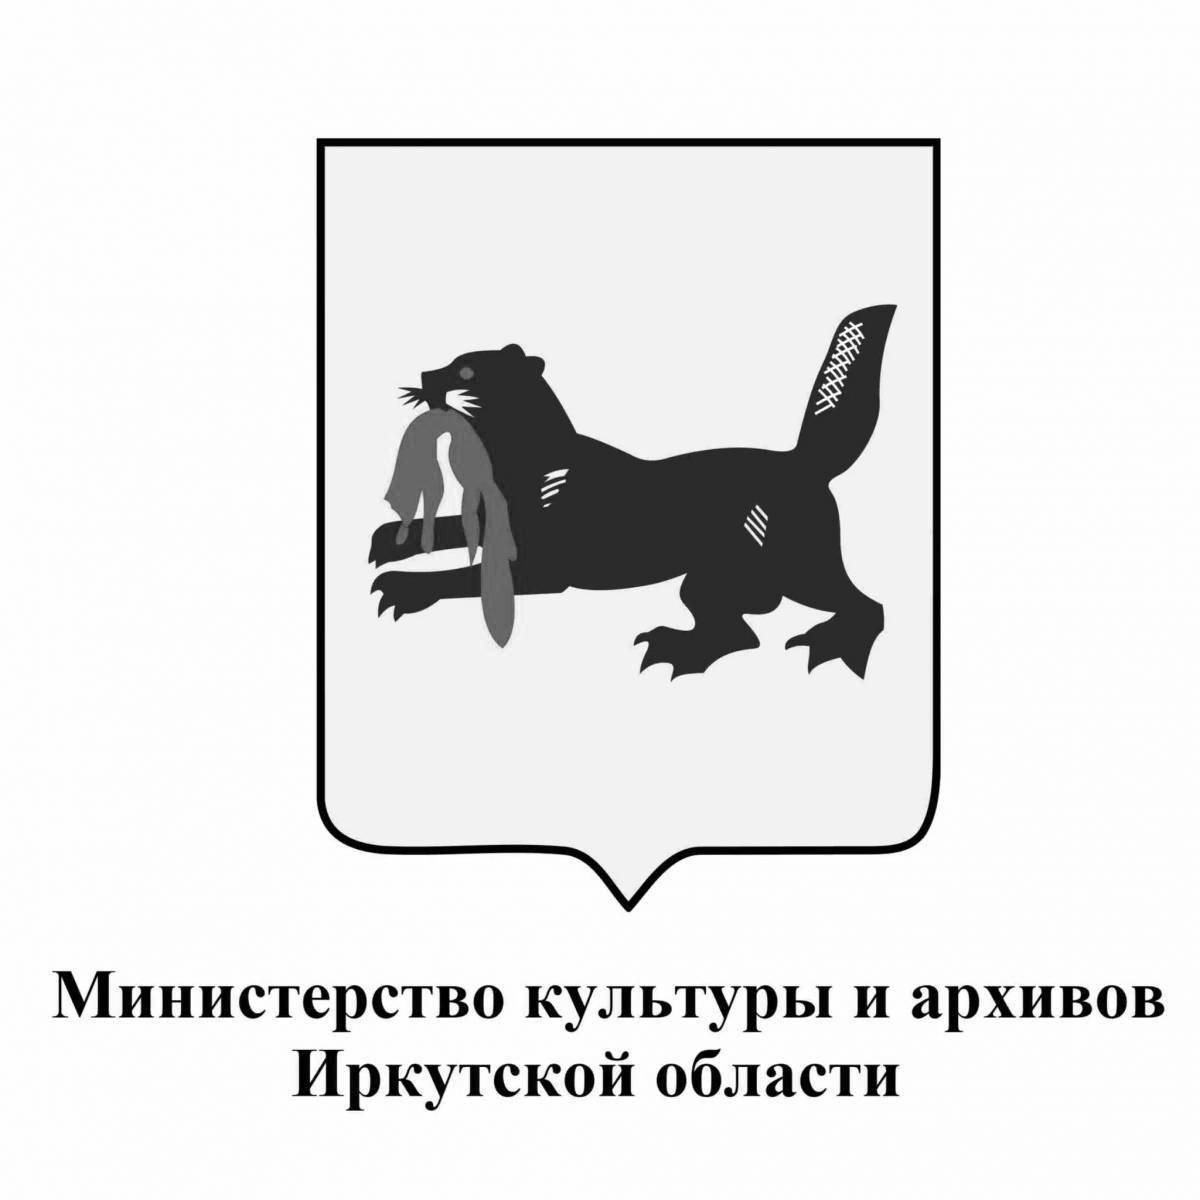 Coat of arms of irkutsk #7